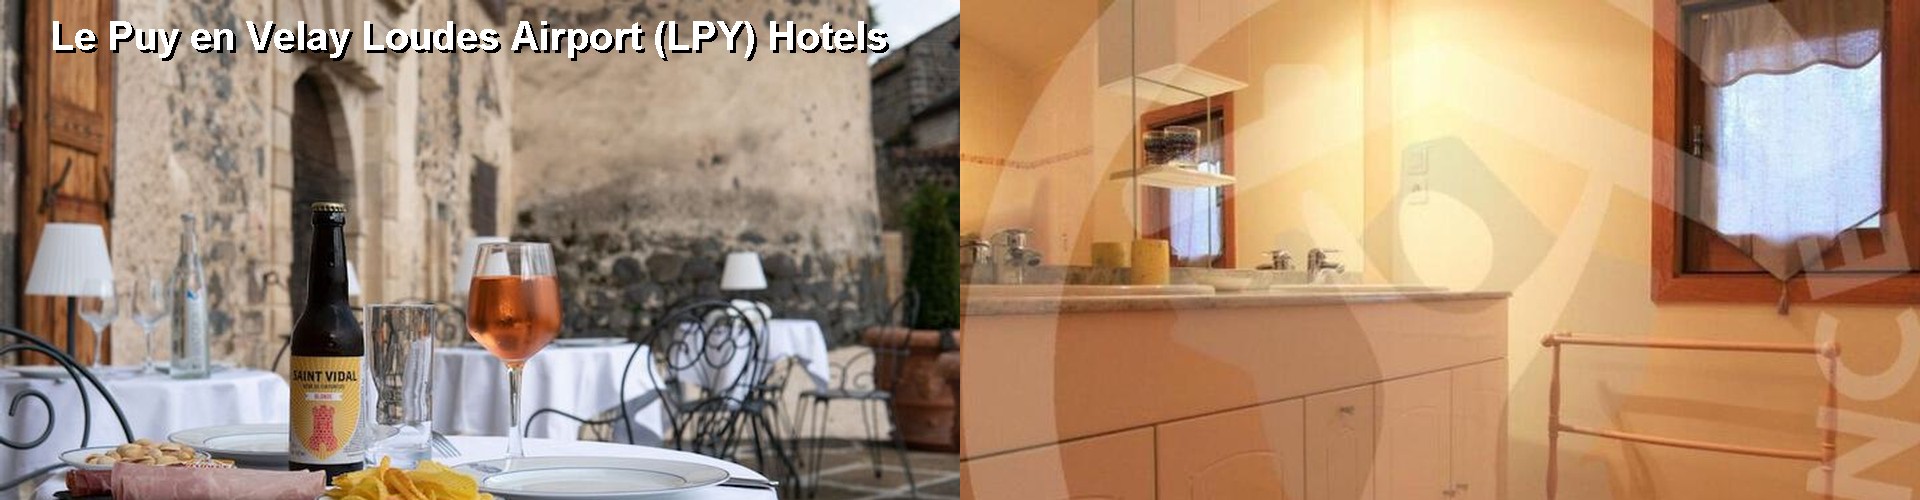 3 Best Hotels near Le Puy en Velay Loudes Airport (LPY)